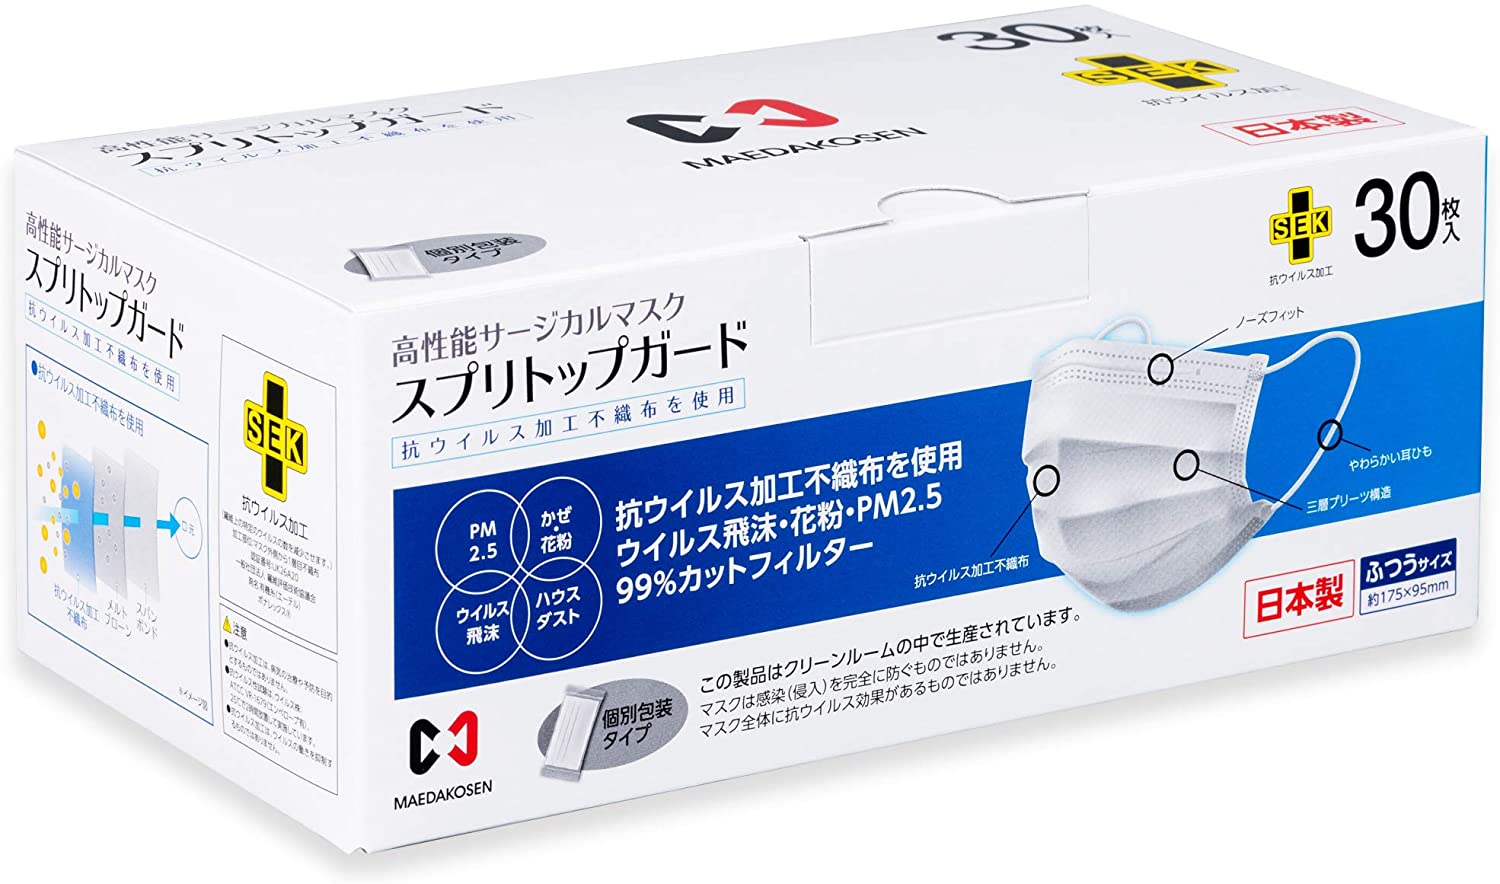 MAEDAKOSEN SPRITOP GUARD Antiviral Mask 30pcs – Tokyo on Demand